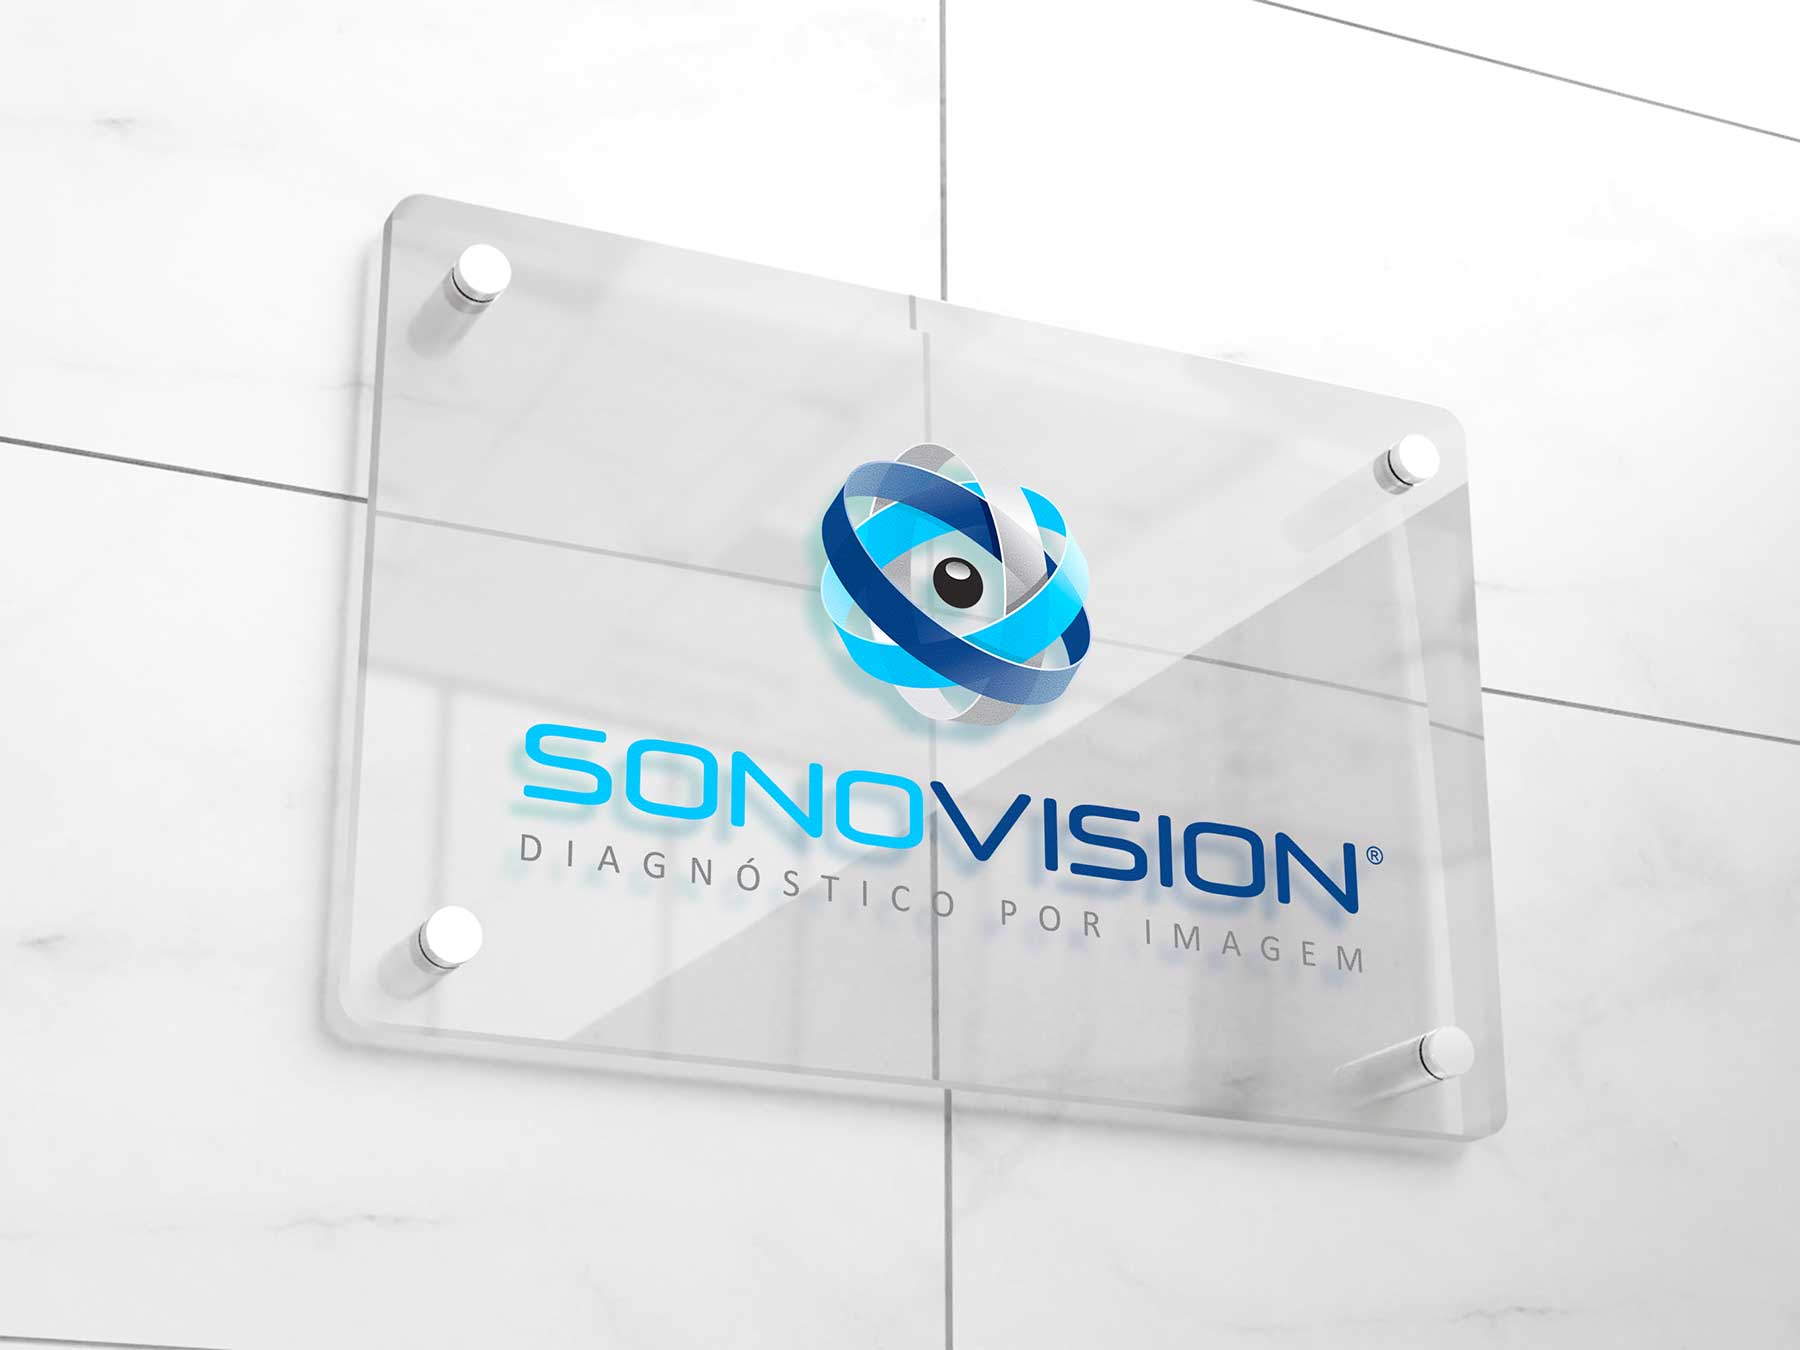 Logo Sonovision